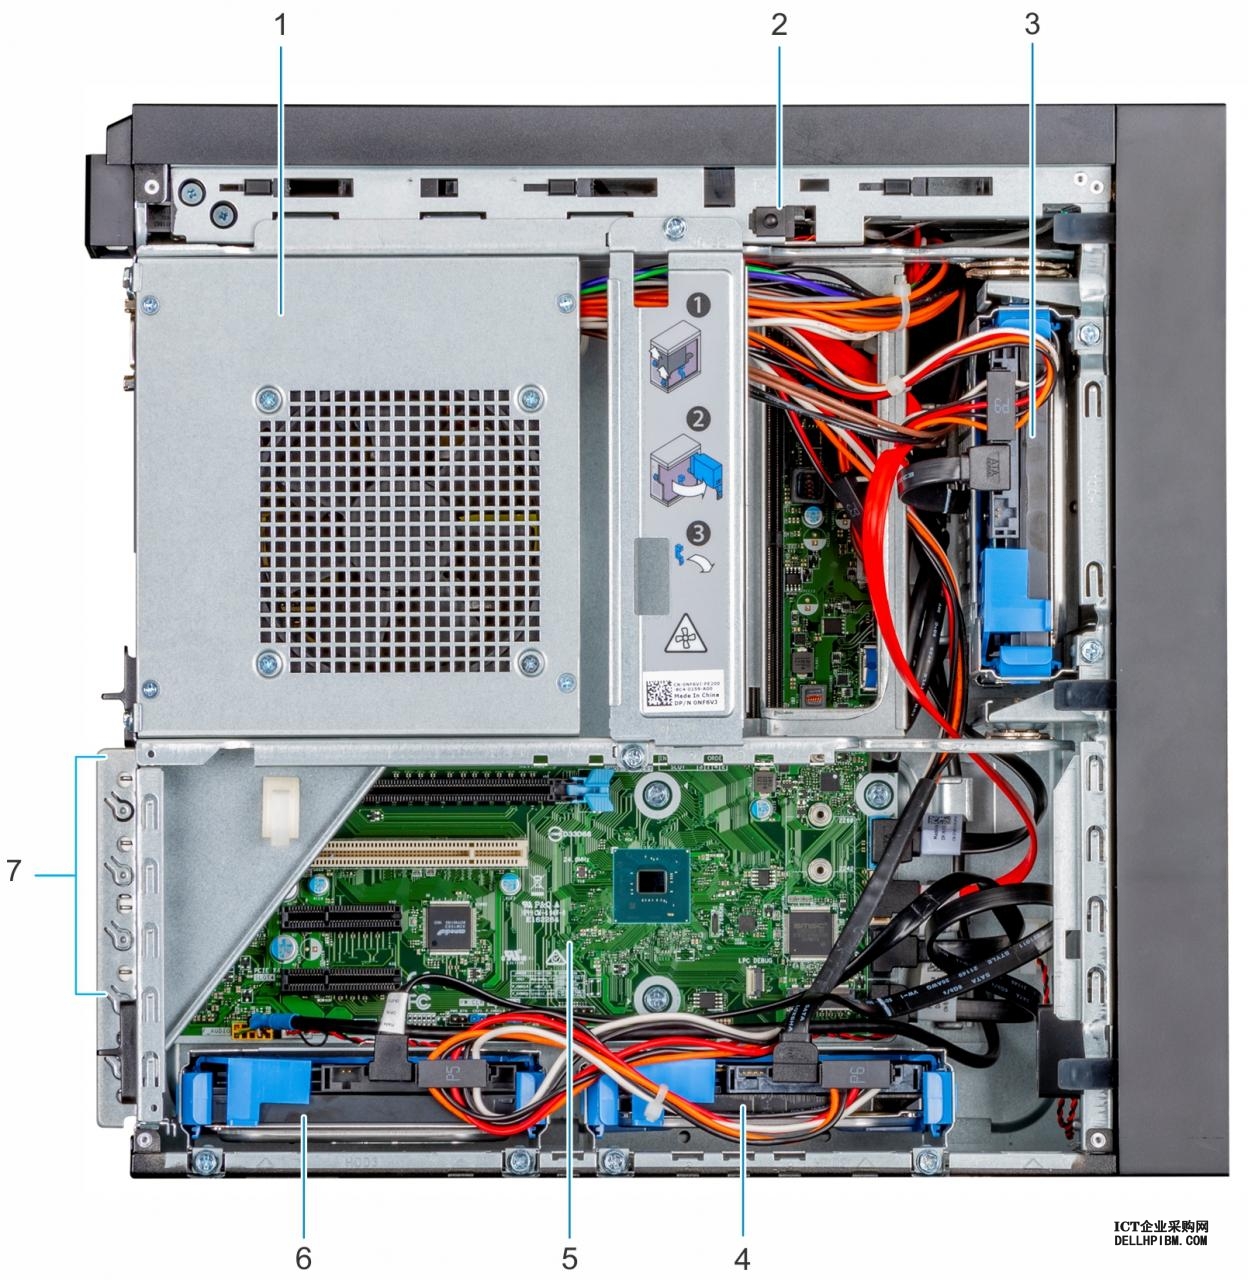 Dell戴尔 PowerEdge T40塔式服务器产品样式，外部形态，内部构造及配套说明